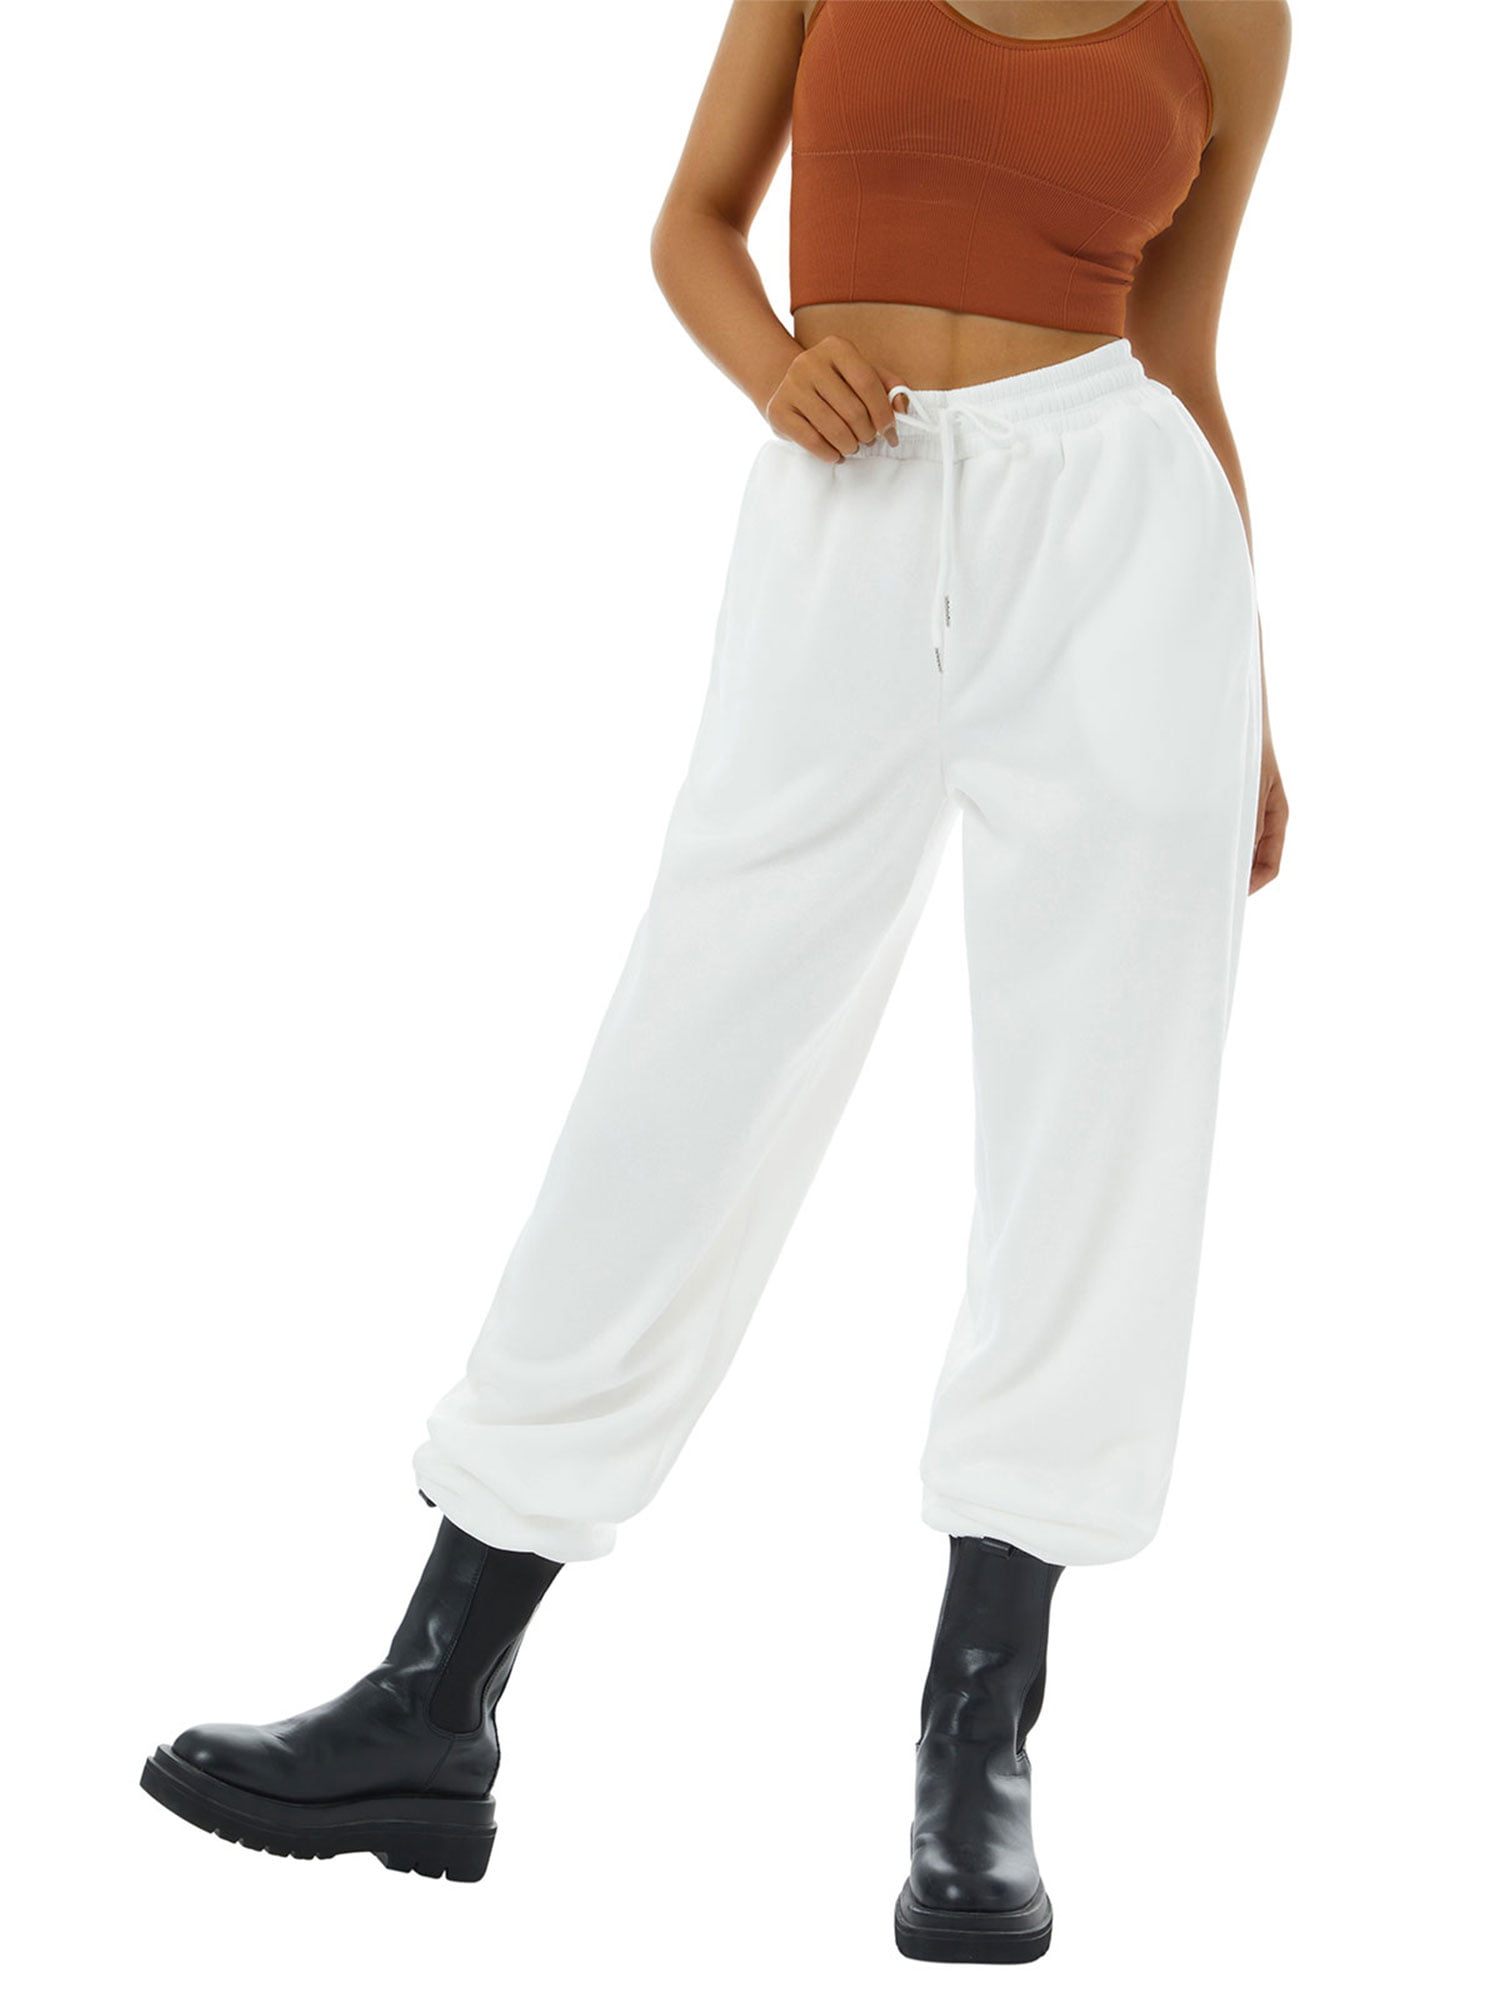 LSFYSZD New Fashion Women Cinch Bottom Sweatpants High Waisted Drawstring  Jogger Sweat Pants Causal Workout Active Lounge Trousers